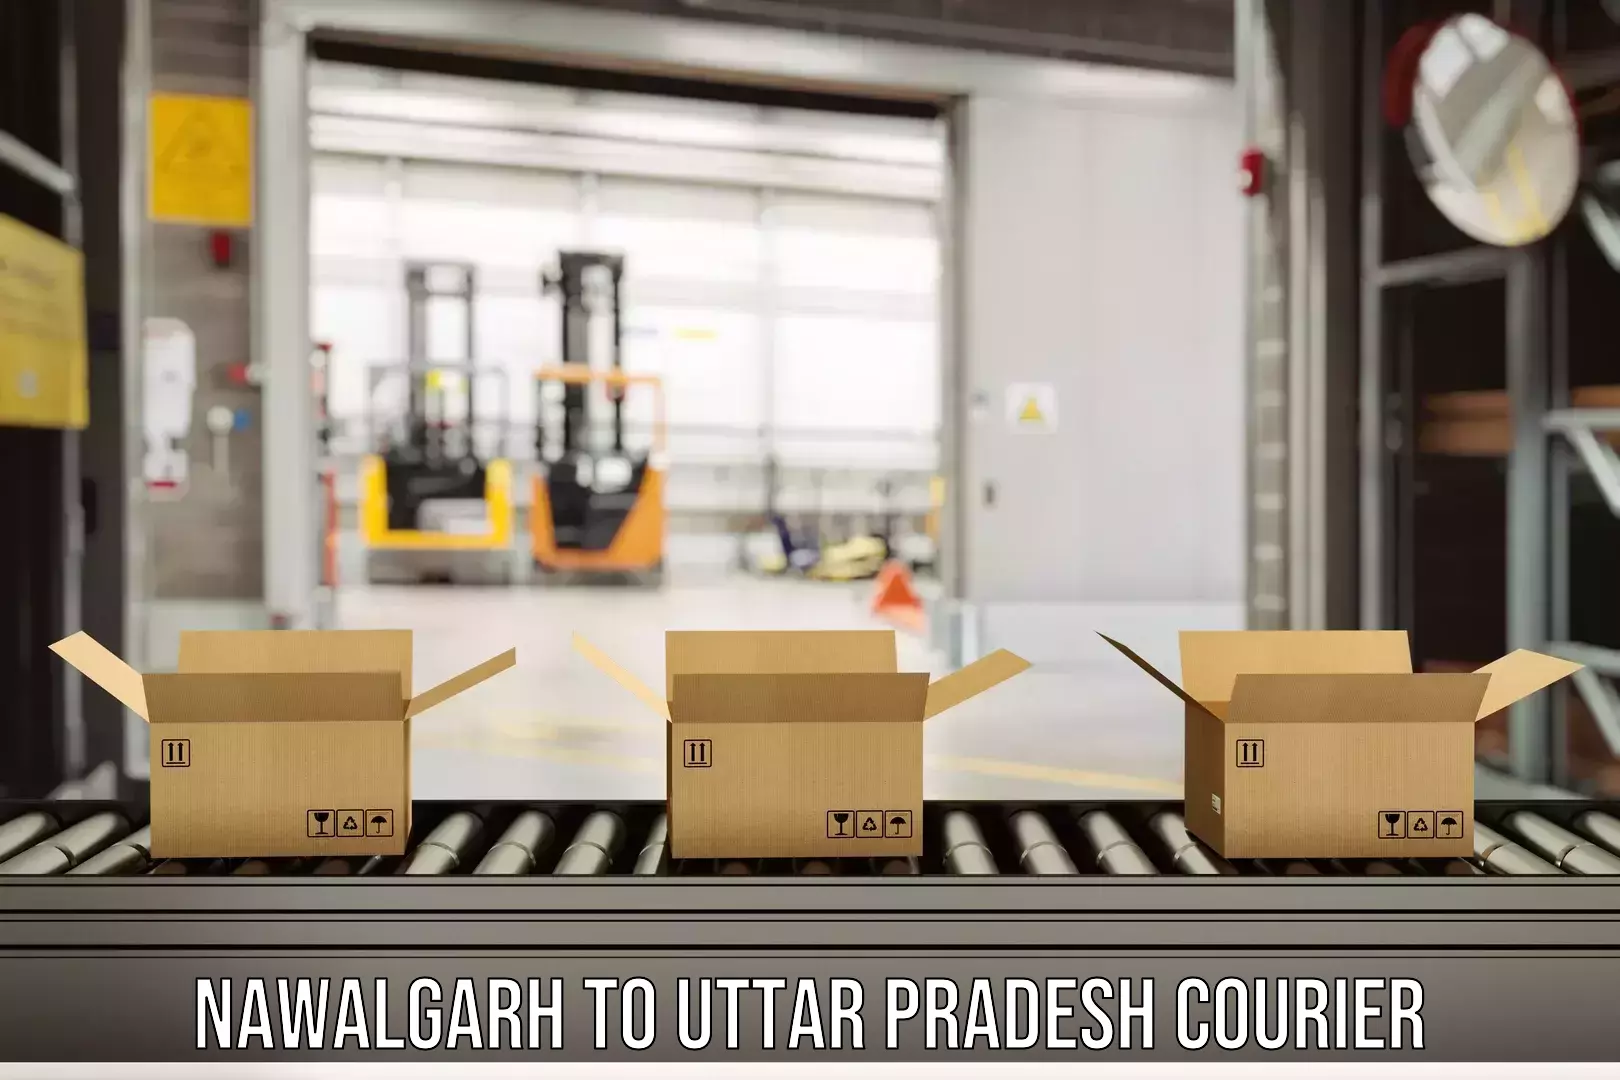 User-friendly delivery service Nawalgarh to Uttar Pradesh